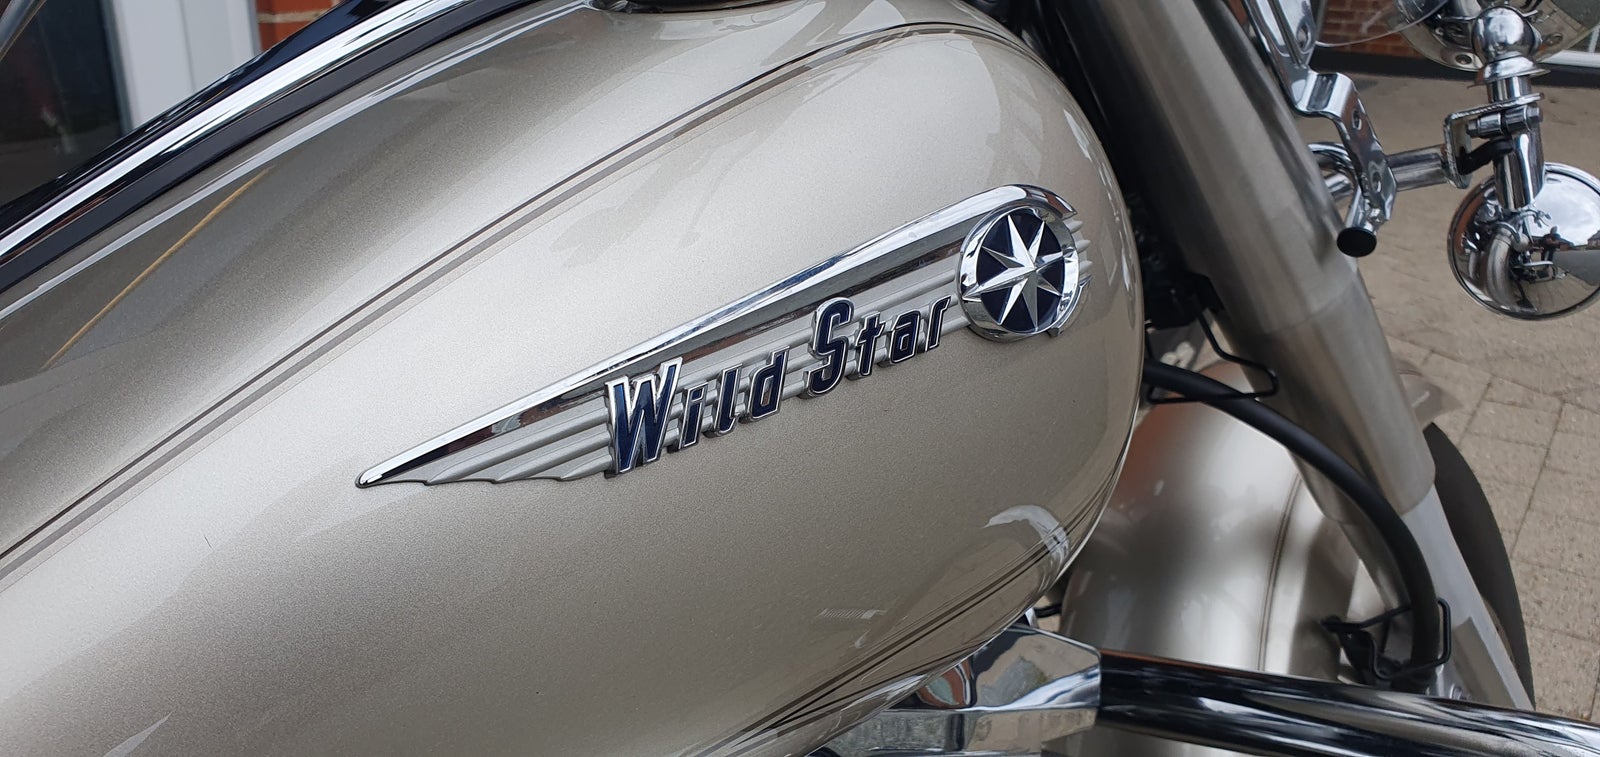 Yamaha, Wildstar, 1600 ccm